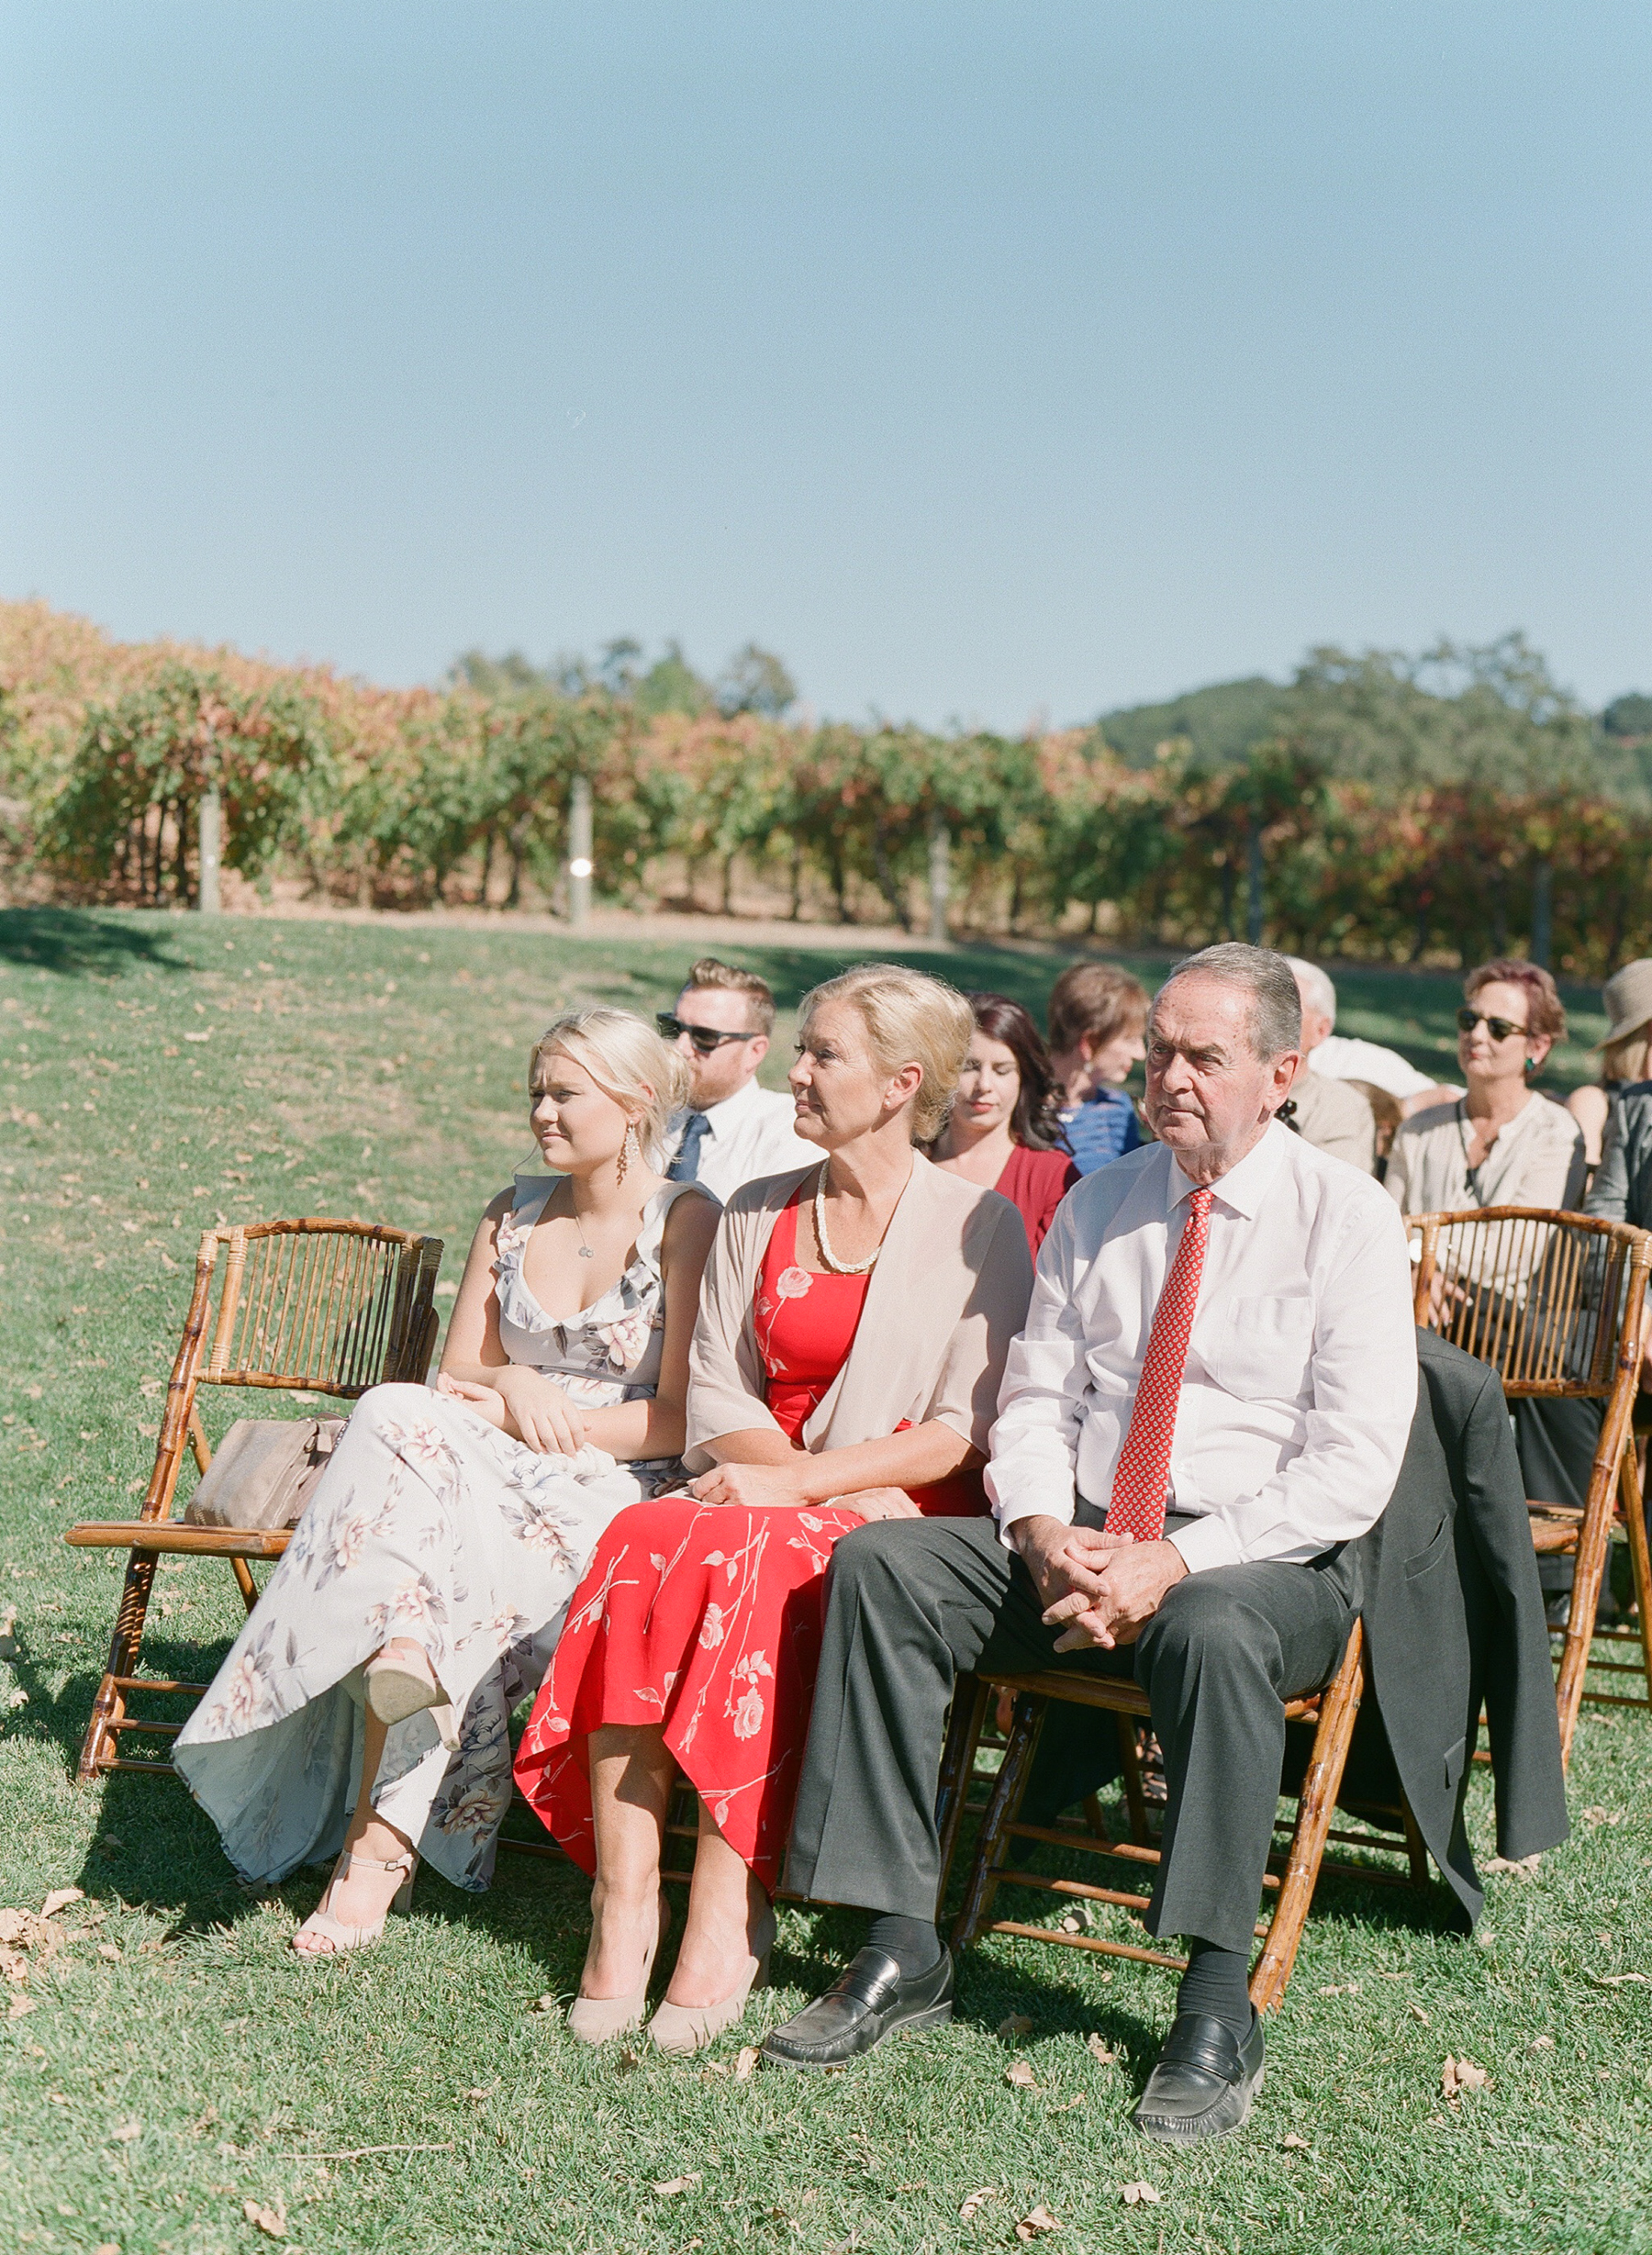 Hammersky vineyards wedding photographer | Wine country wedding | Paso Robles wedding photographer | California film photographer | Napa wedding photographer | Provence wedding photographer | Molly Carr